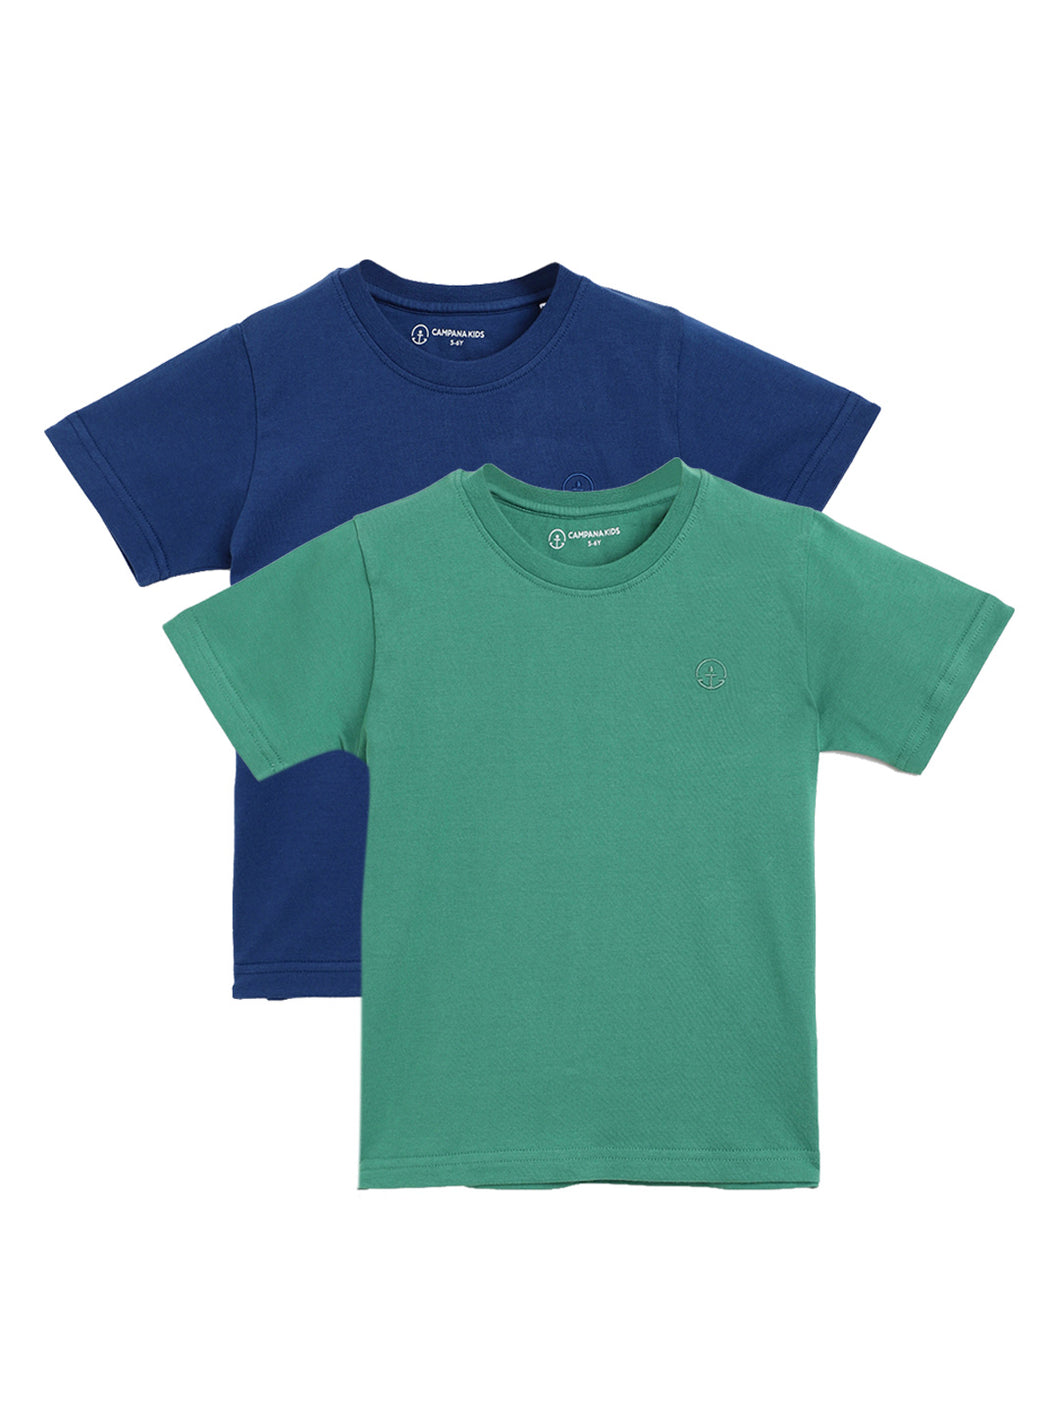 Campana Boys Luis Short Sleeve Round Neck T-Shirt - Pack of 2 - Green & Blue